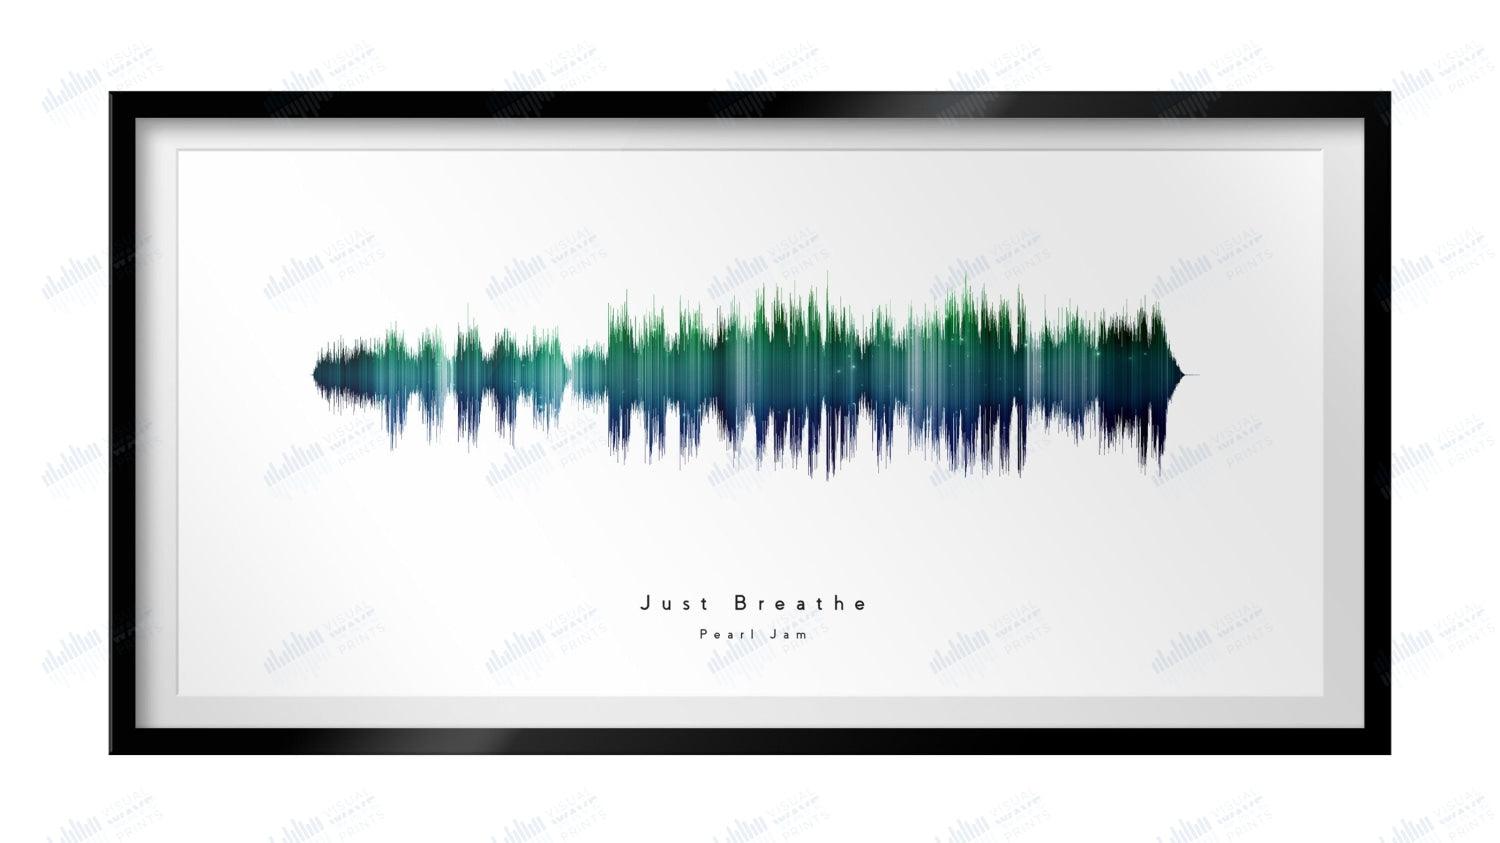 Just Breathe by Pearl Jam - Visual Wave Prints